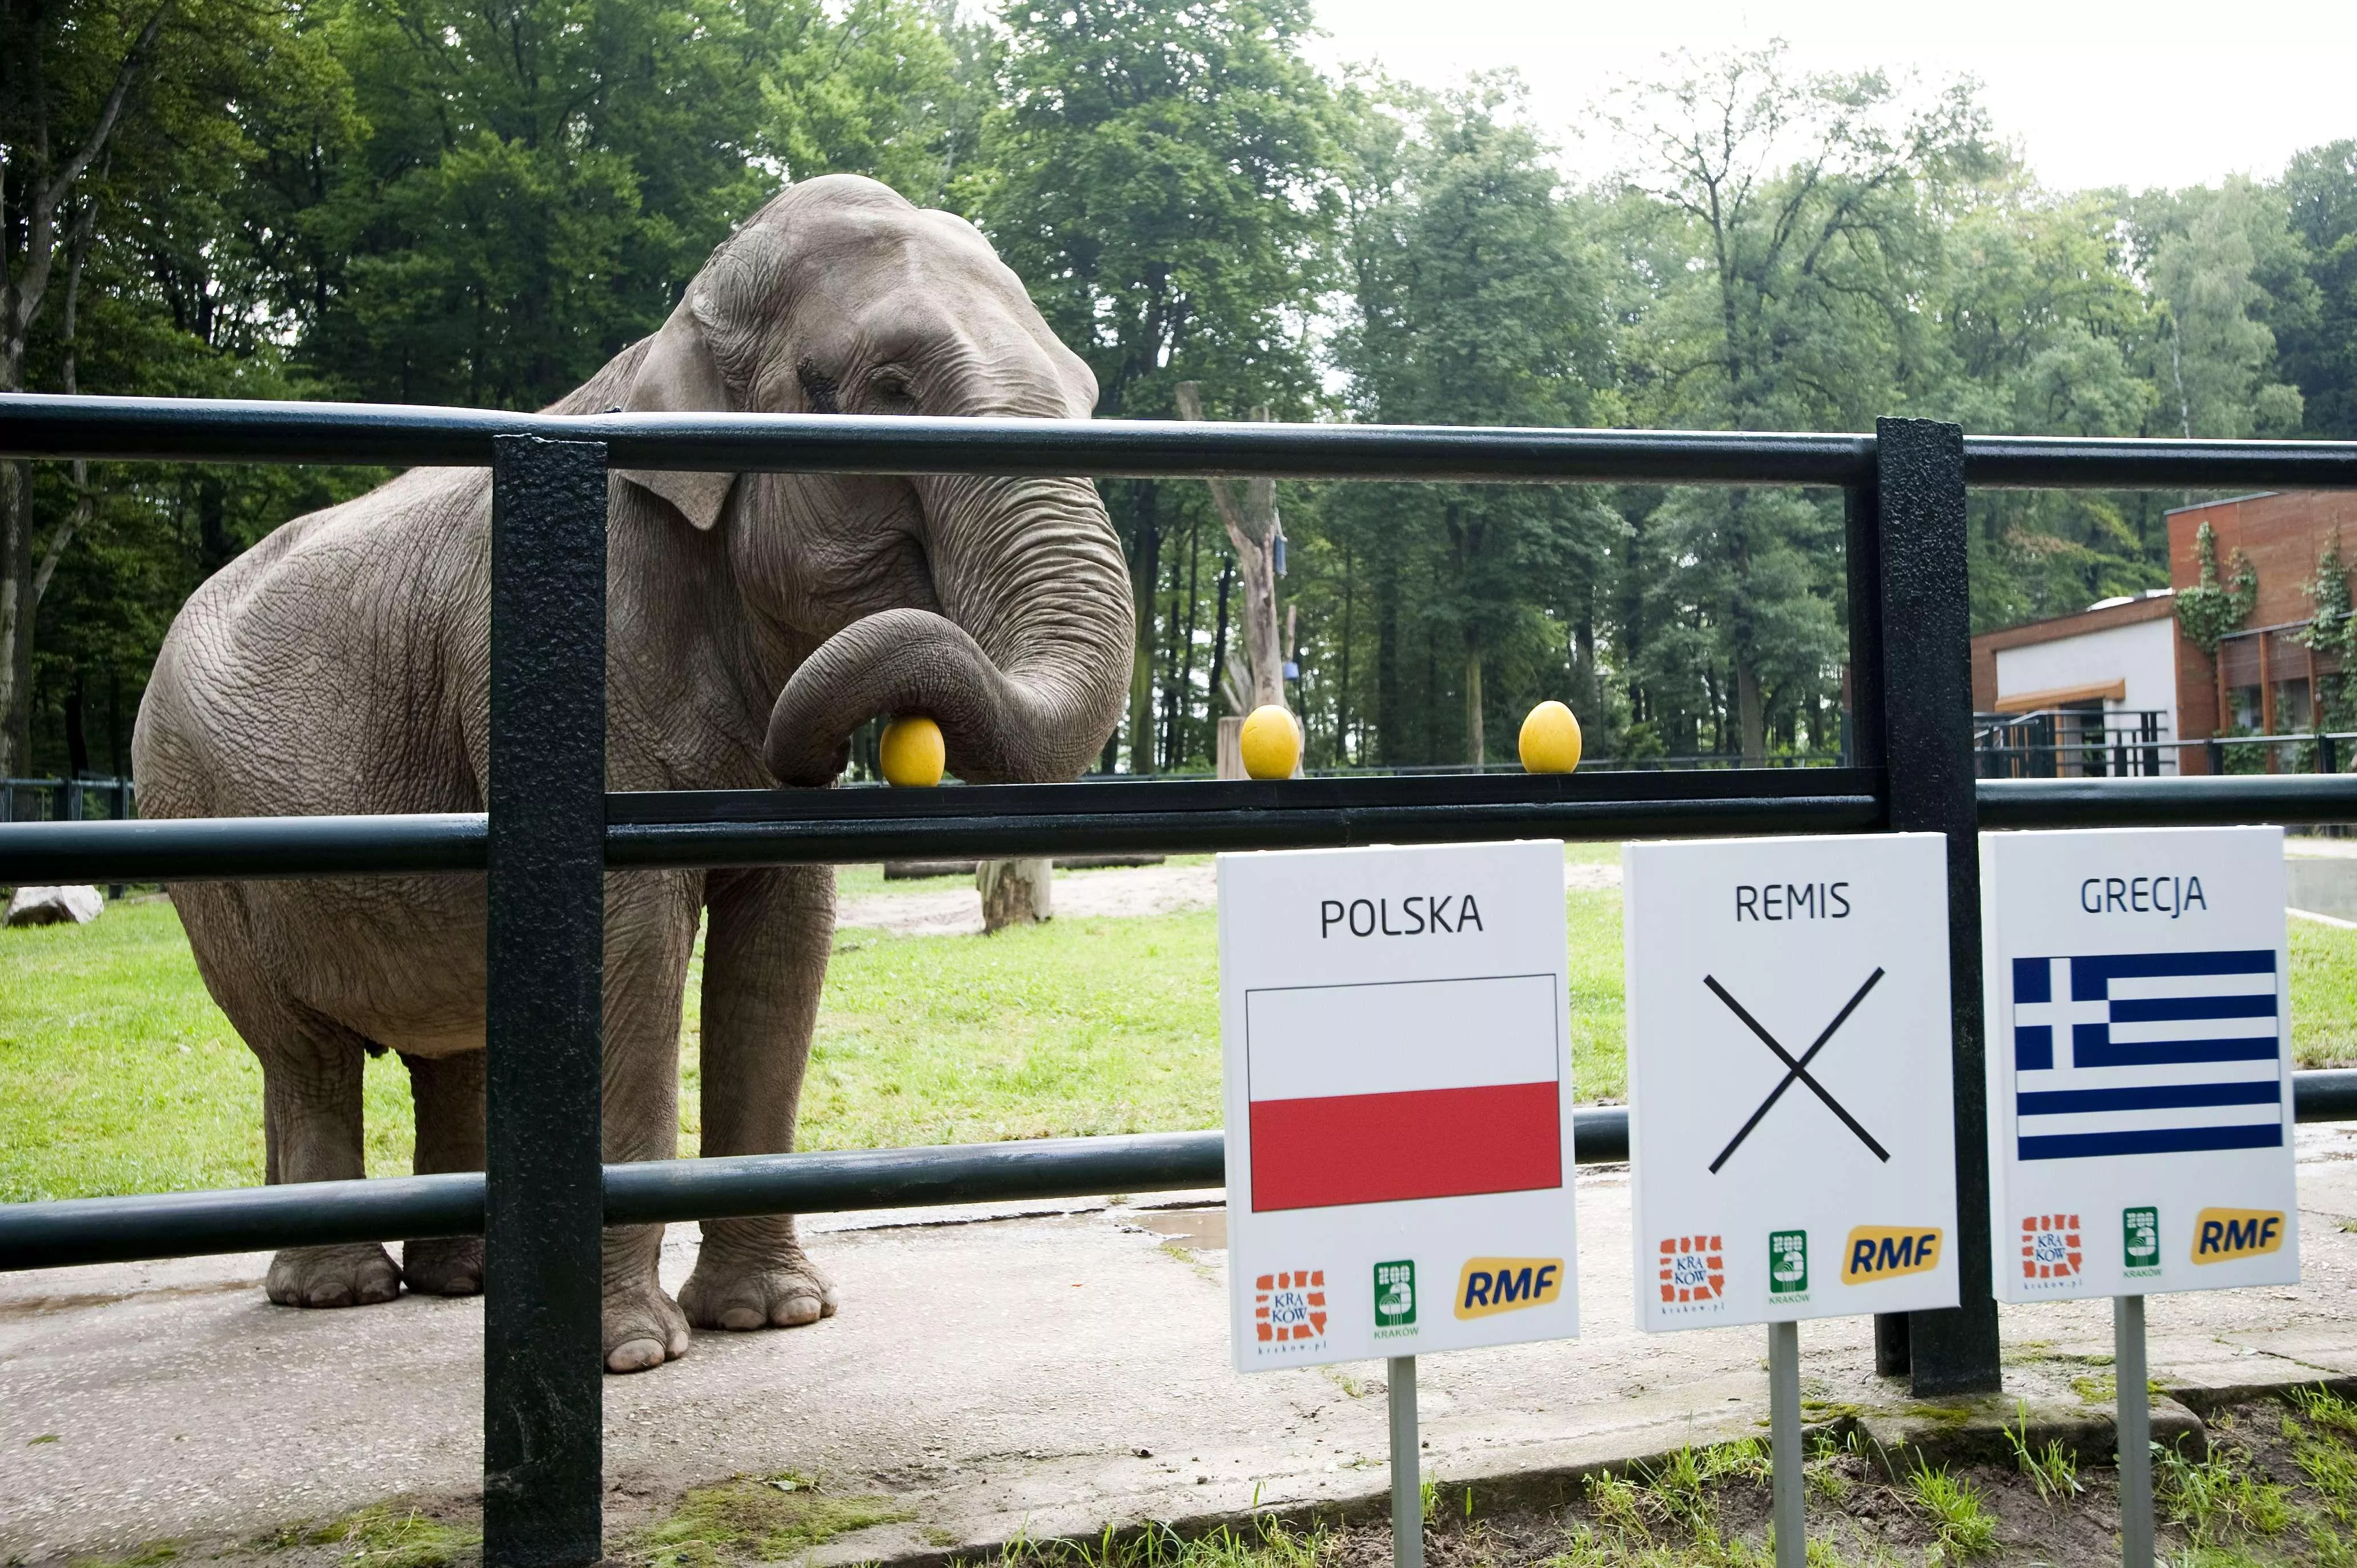 Krakow Zoo in Poland, Europe | Zoos & Sanctuaries - Rated 4.9